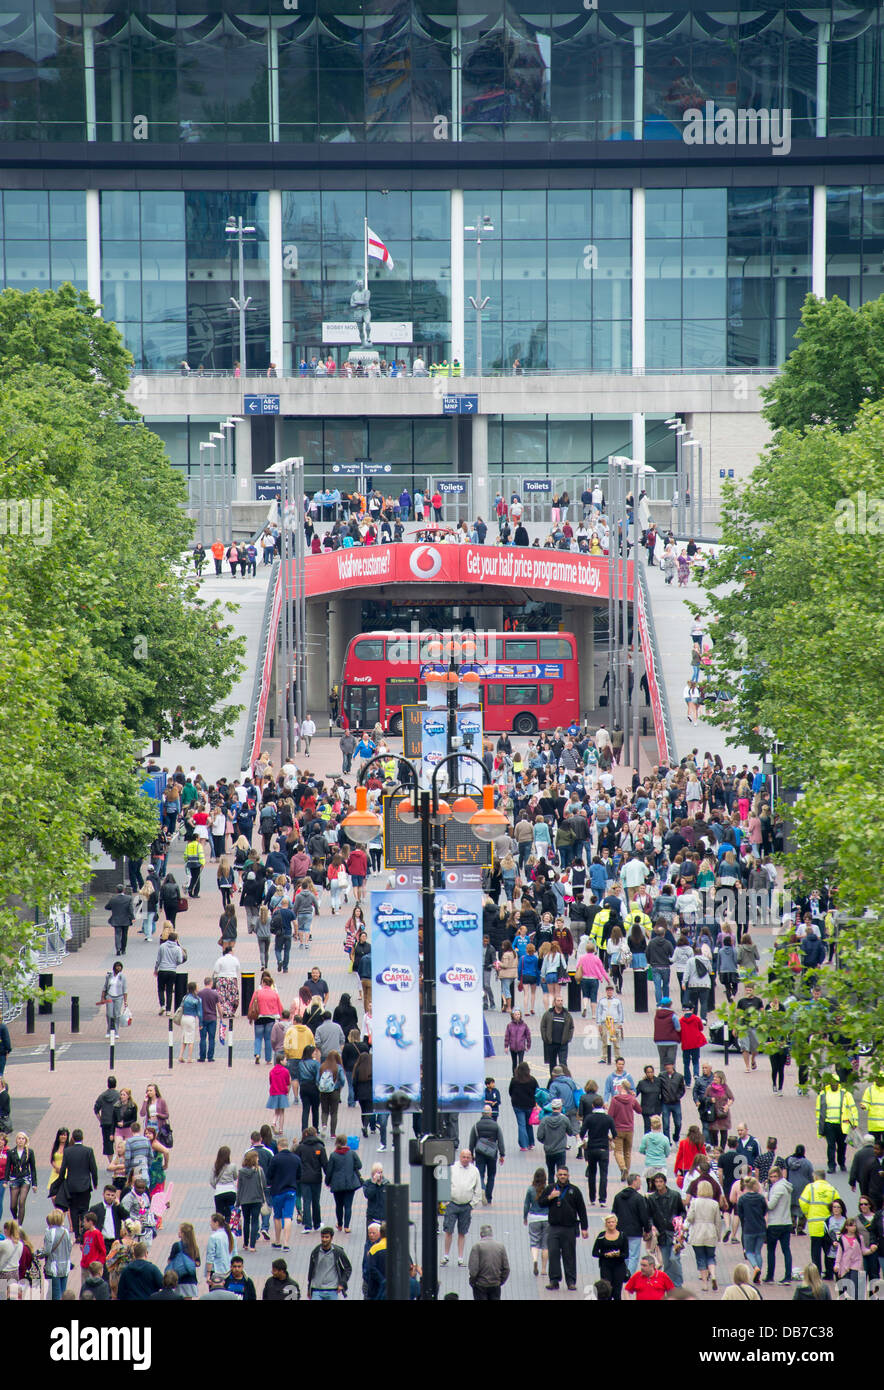 Fans arrive for the Capital FM Summertime Ball, Wembley Stadium, London, Sunday, June. 9, 2013. Stock Photo